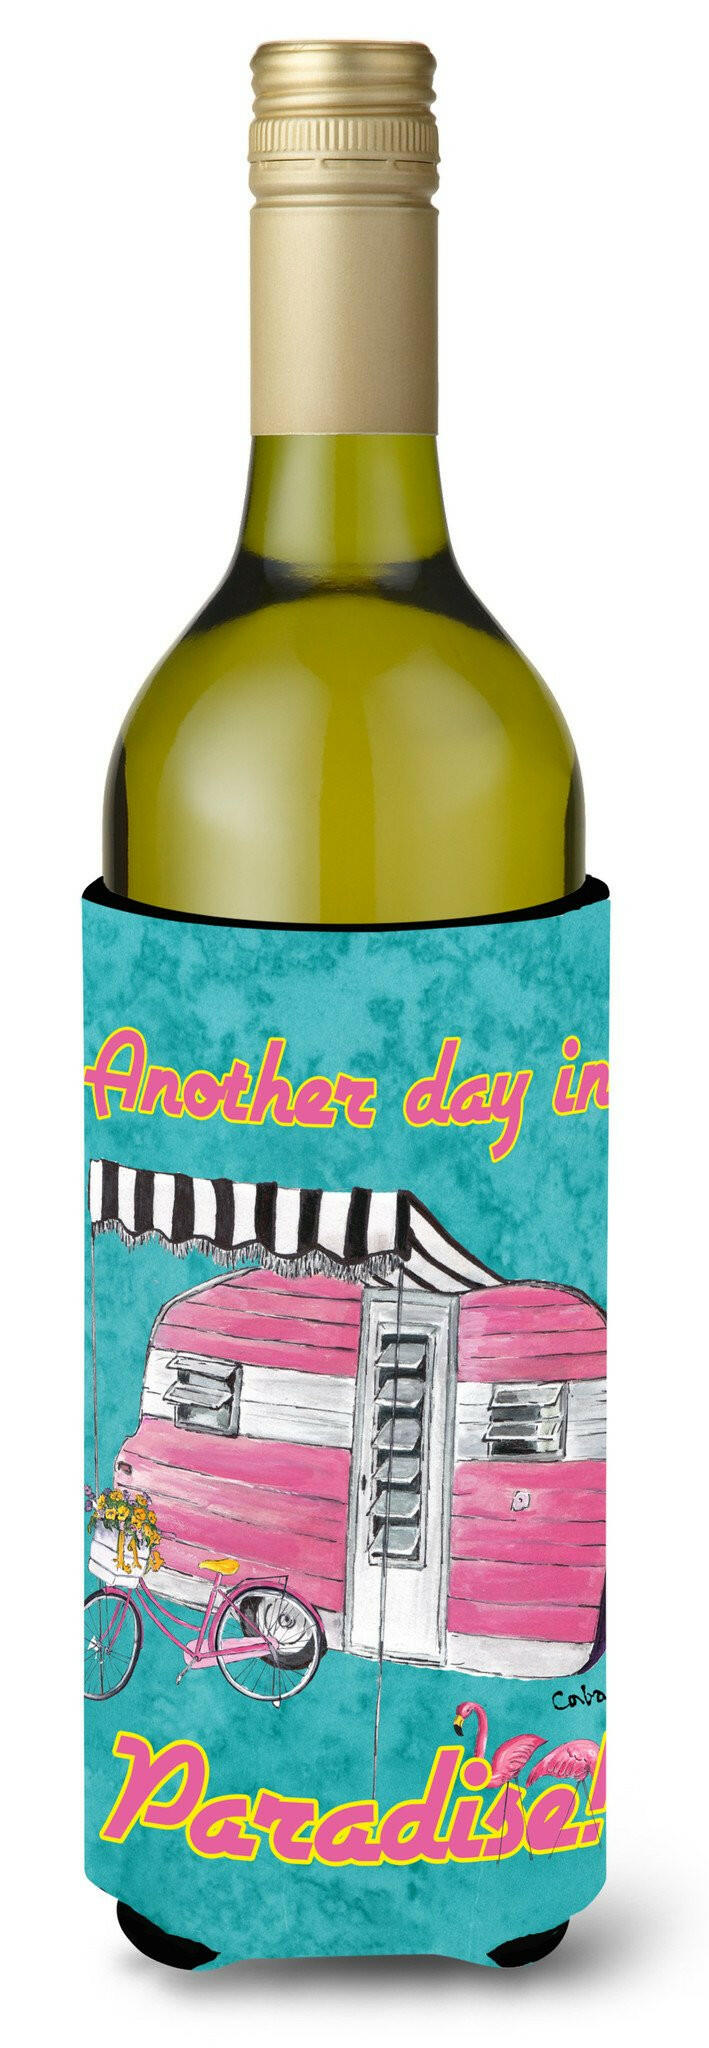 Another Day in Paradise Retro Glamping Trailer Wine Bottle Beverage Insulator Beverage Insulator Hugger by Caroline&#39;s Treasures